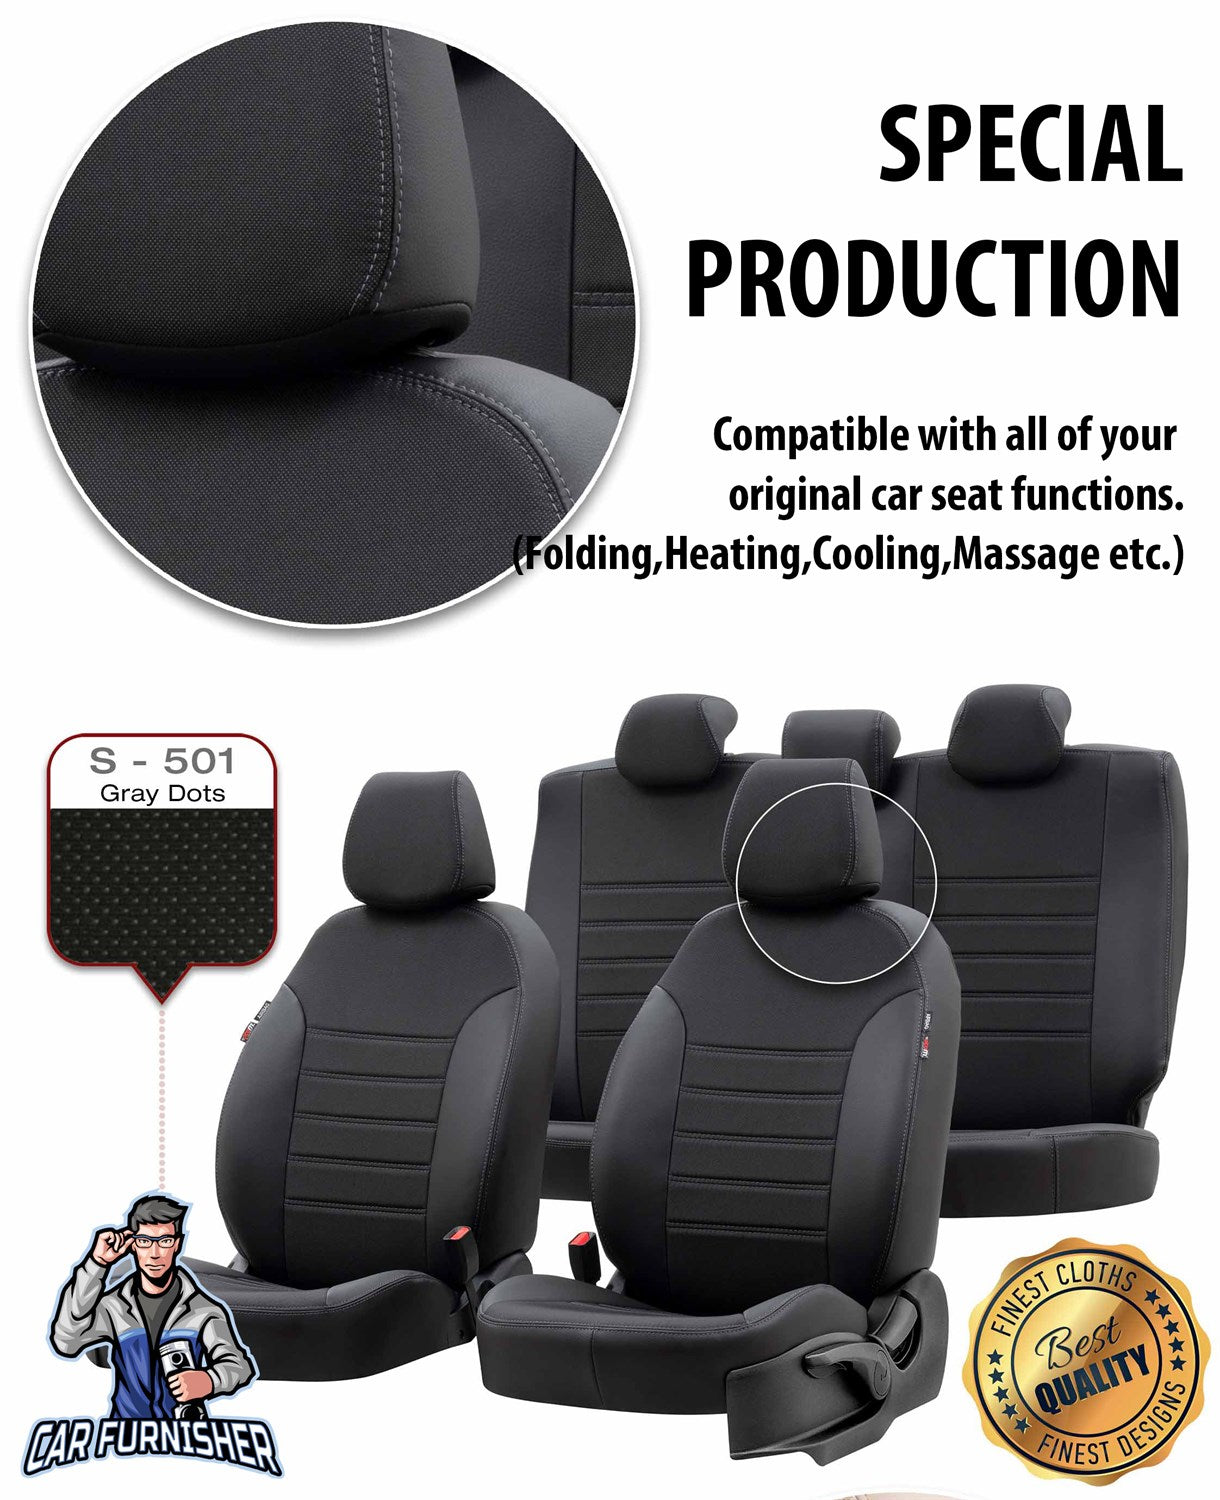 Volkswagen Tiguan Seat Cover Paris Leather & Jacquard Design Black Leather & Jacquard Fabric